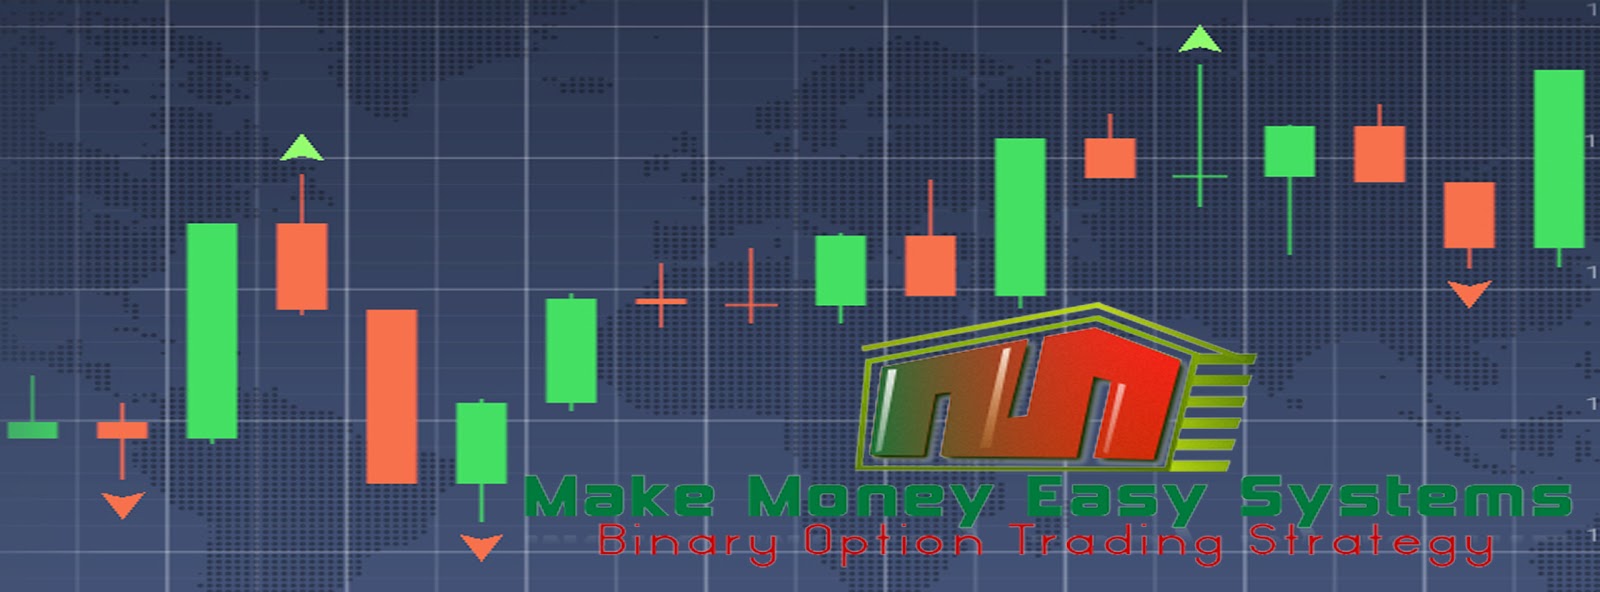 60 second binary options money management